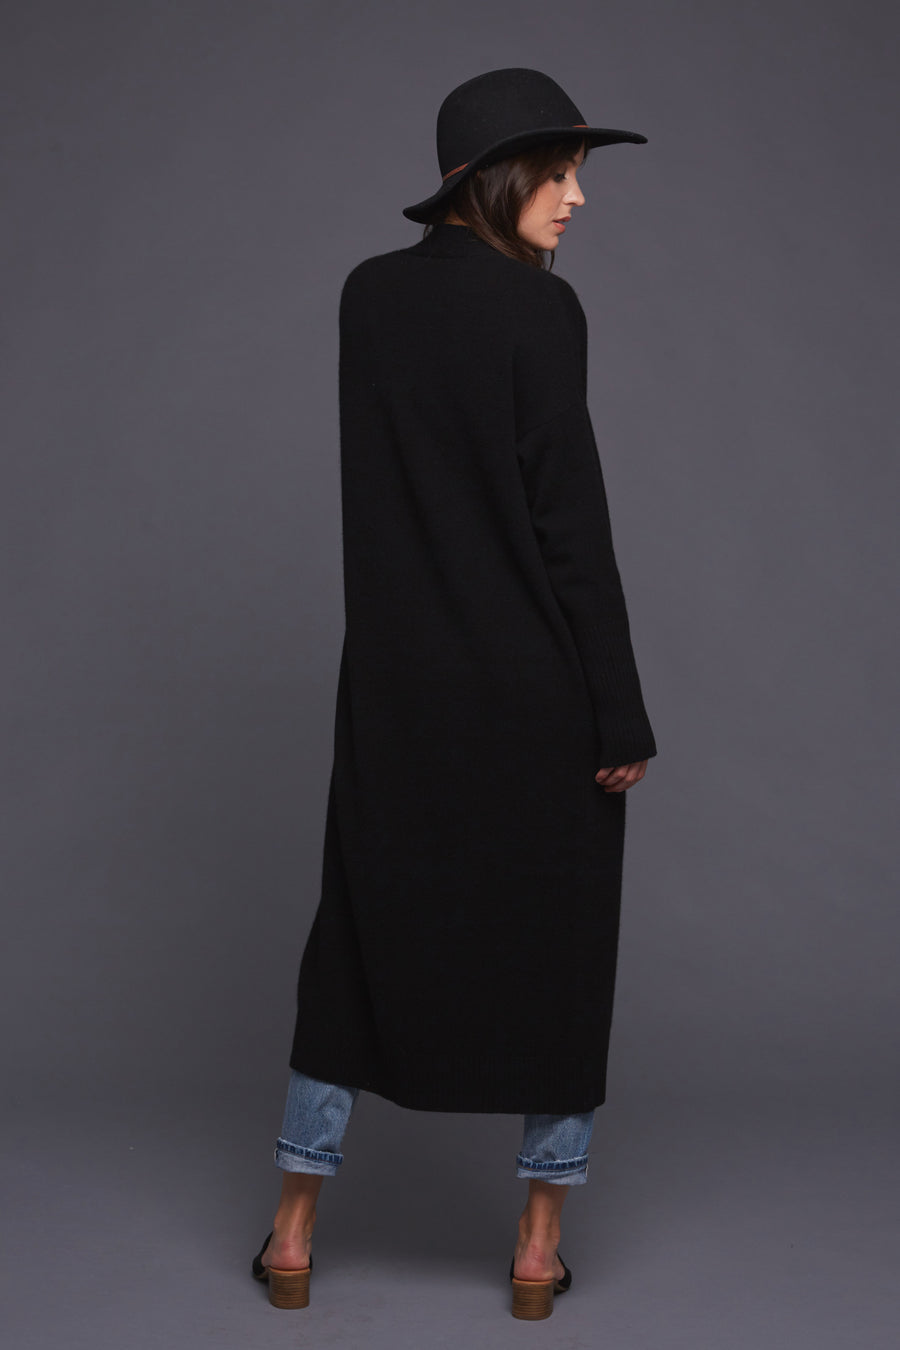 pine cashmere stella women's cashmere wool blend long cardigan coat duster in black